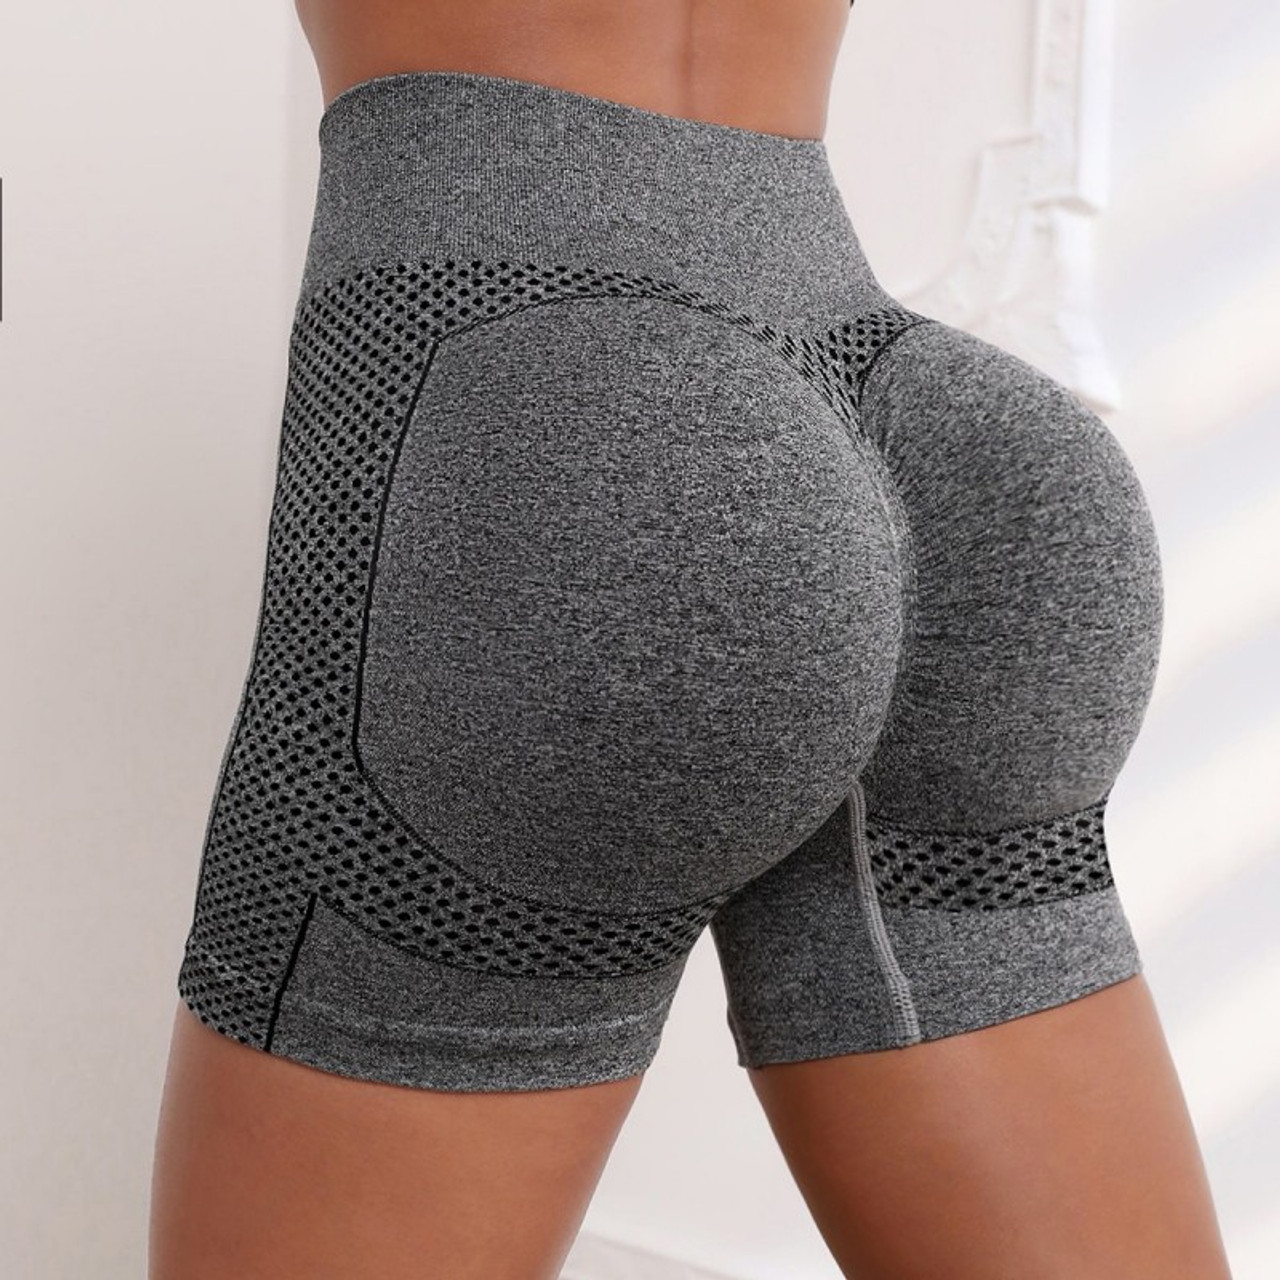 Women's High Waist Booty Hip Lift Sports Hot Pants Bottoms Yoga Shorts Pants